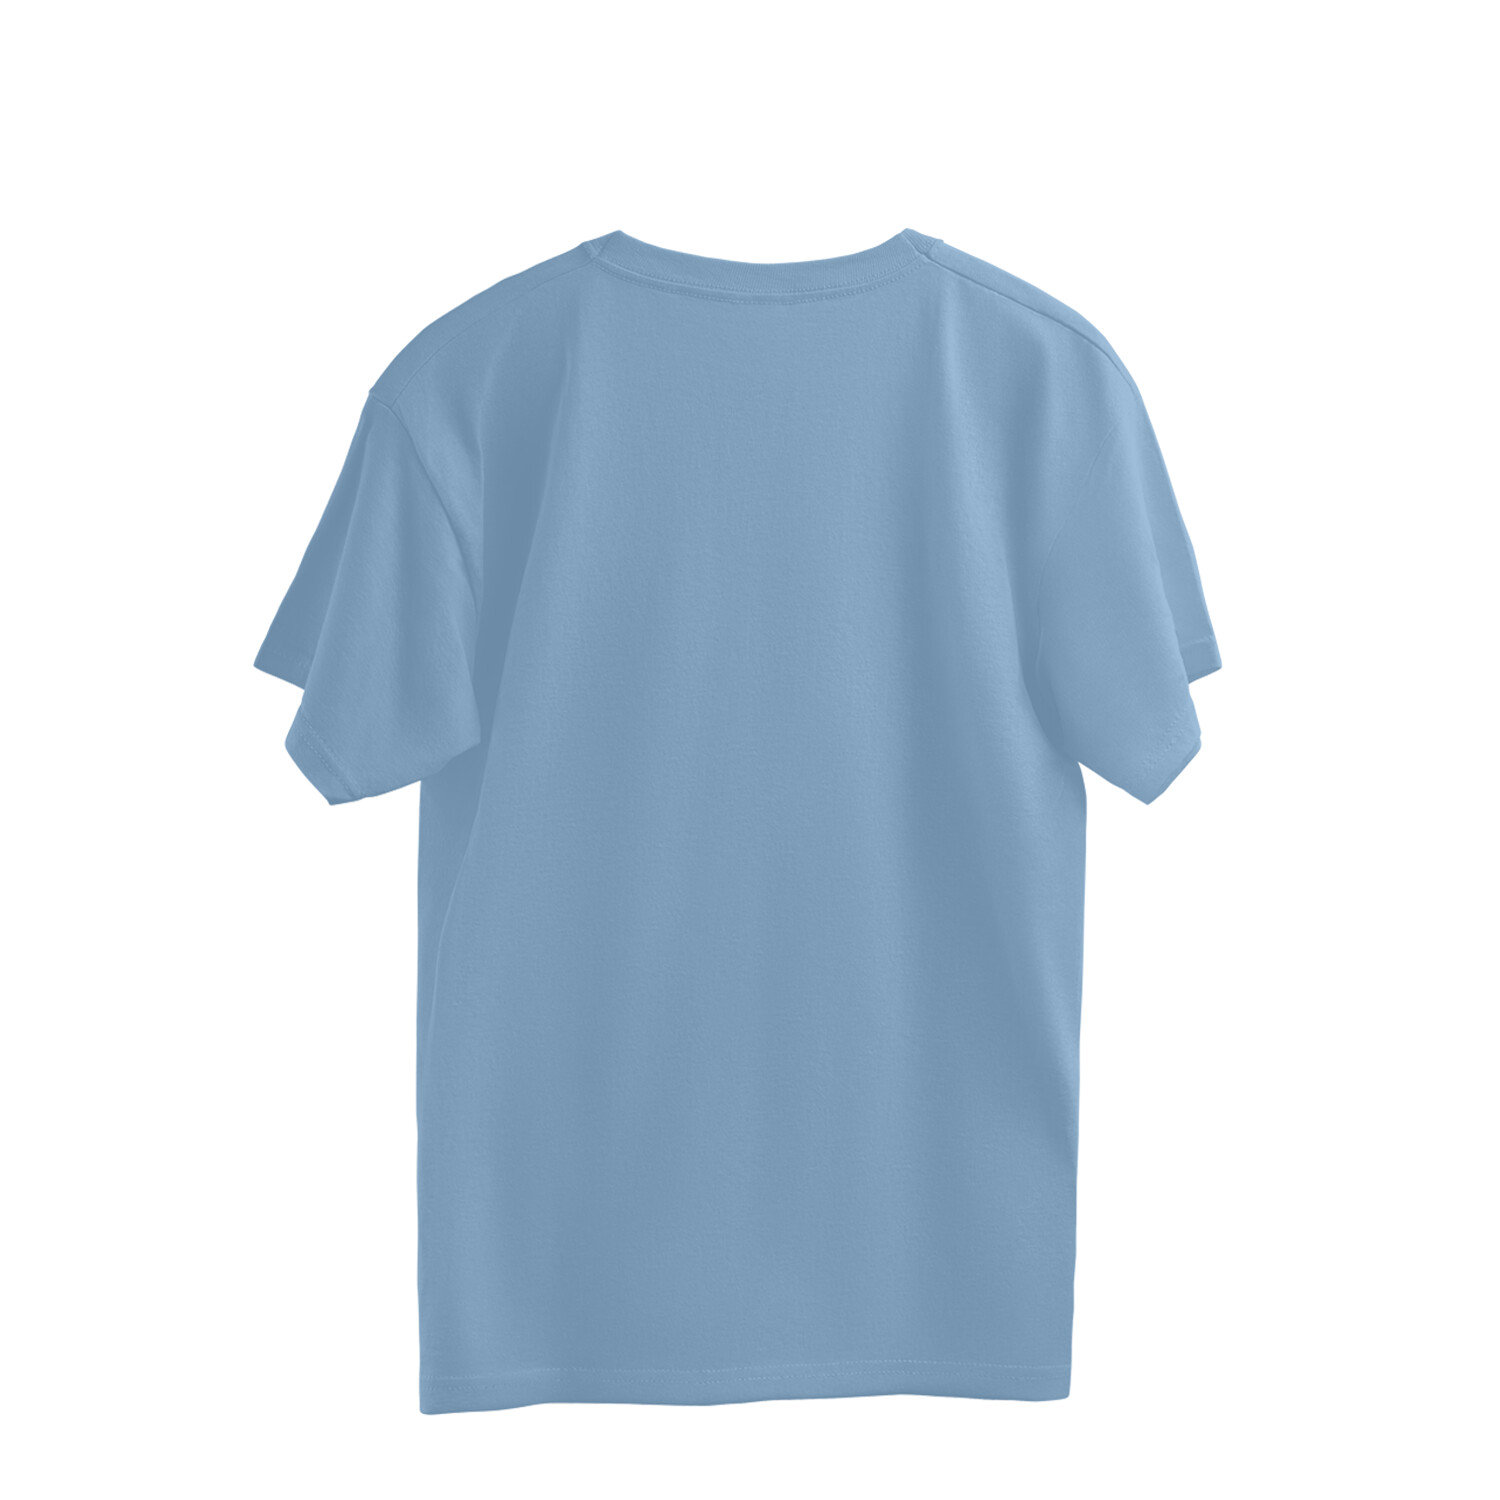 Fairy Tail Men's Oversized Tshirt - Baby Blue, M, Free